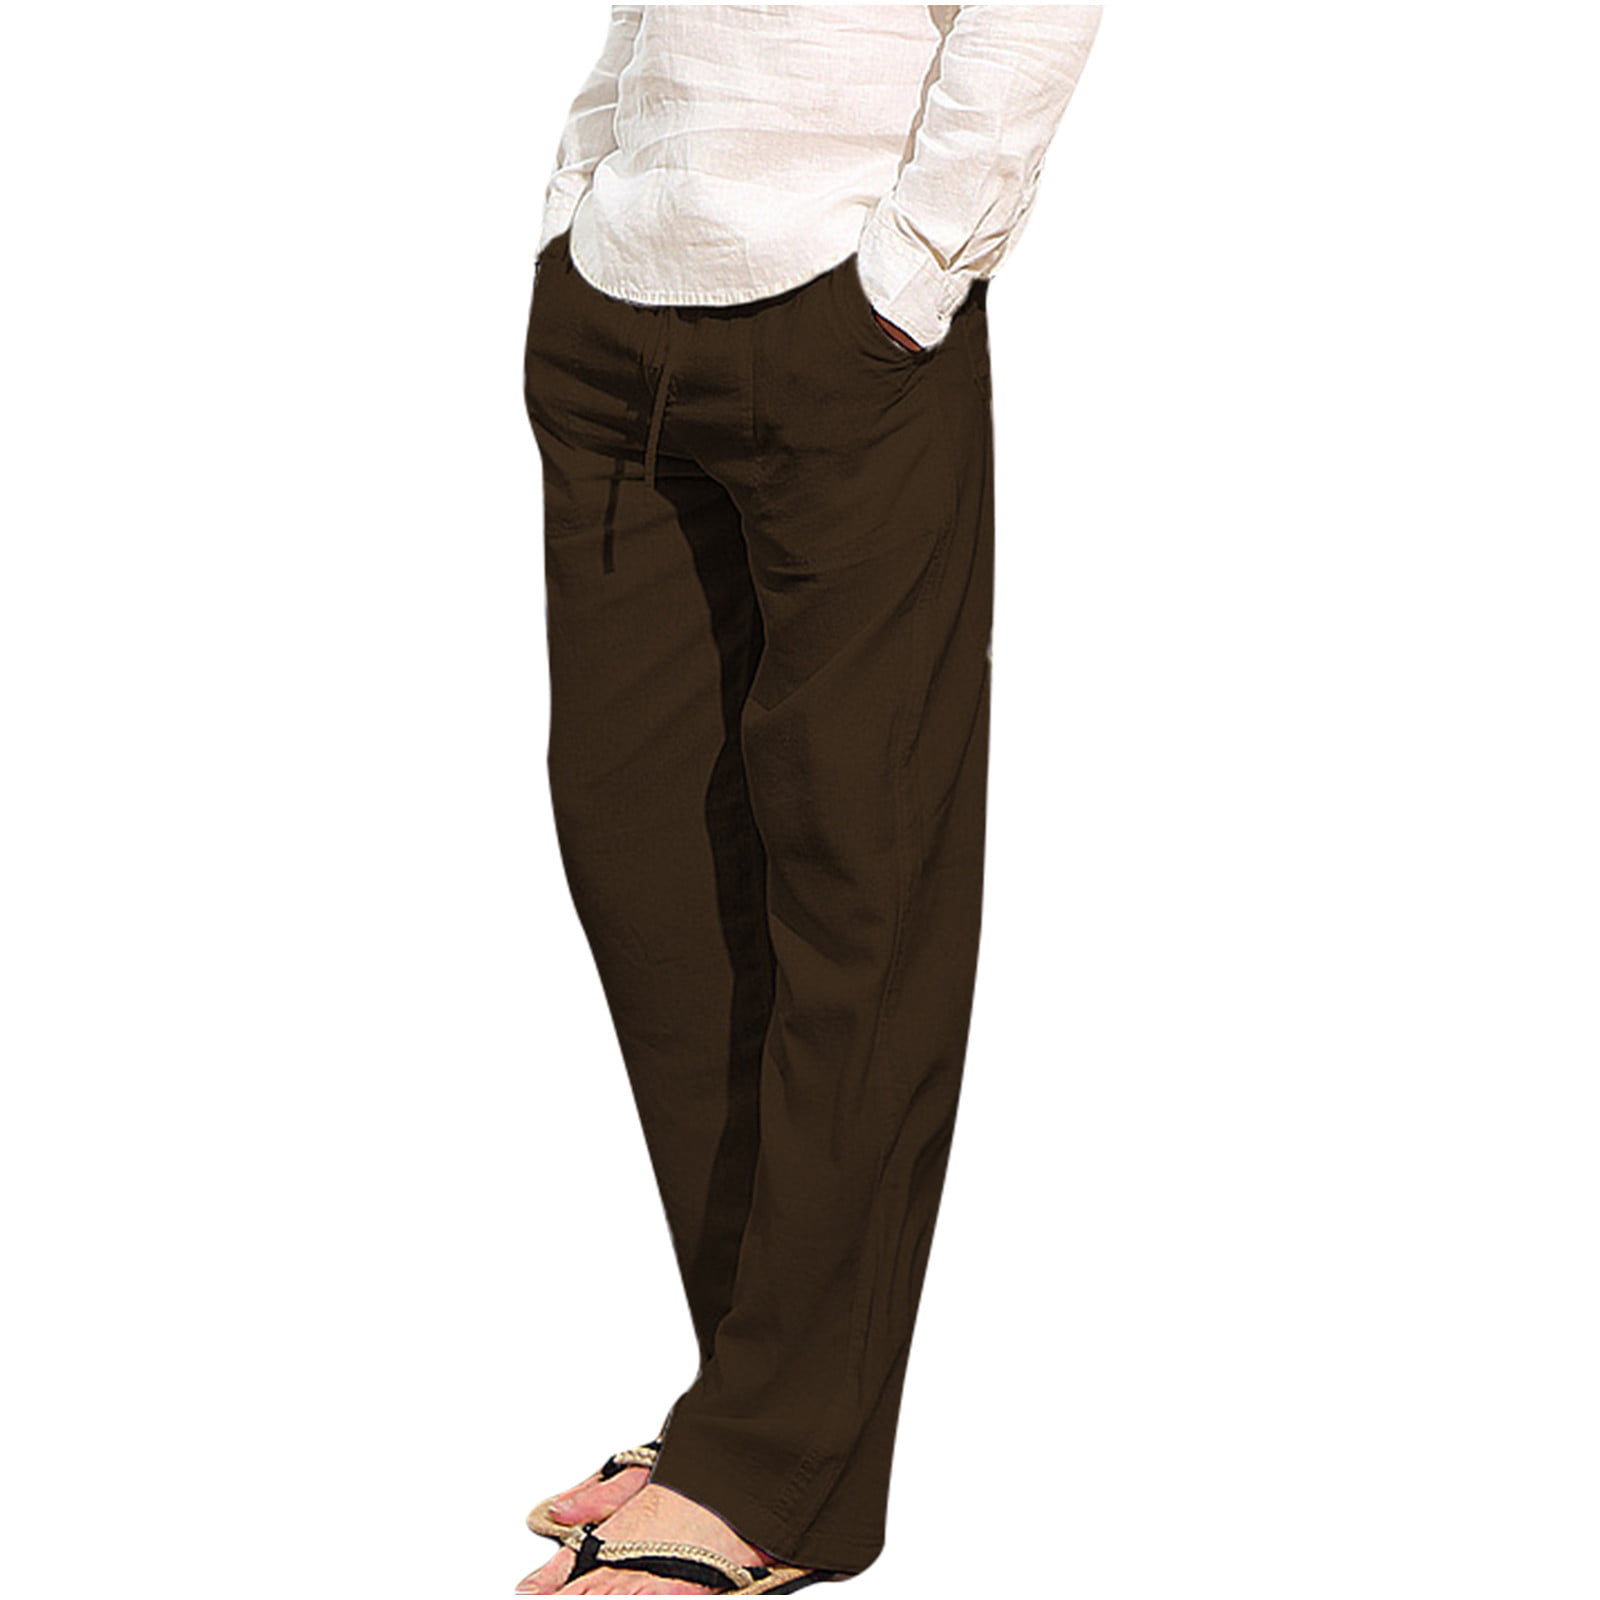 KIHOUT Men And Women Comfortable Printed High Waist Leisure Pants  Sweatpants Pants 